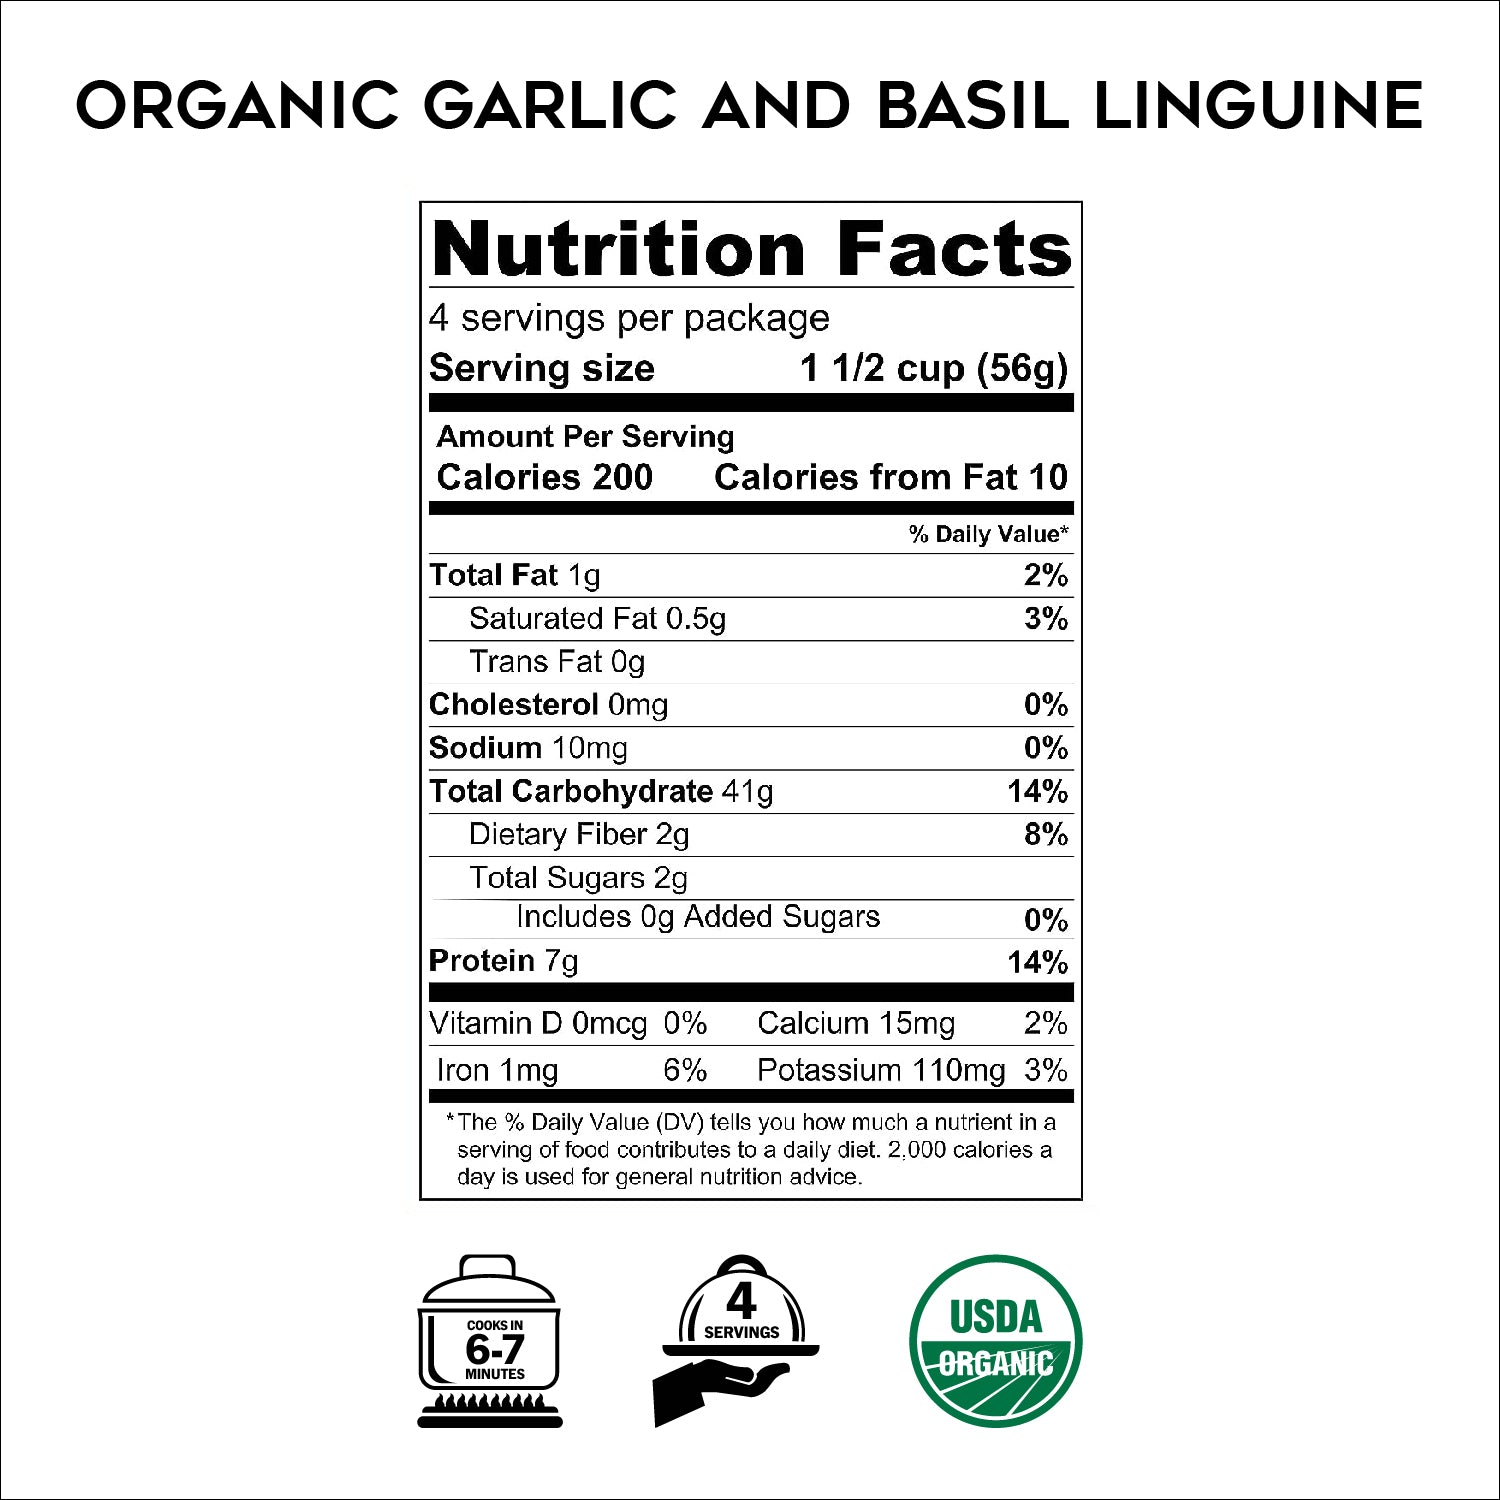 Organic garlic and basil linguine